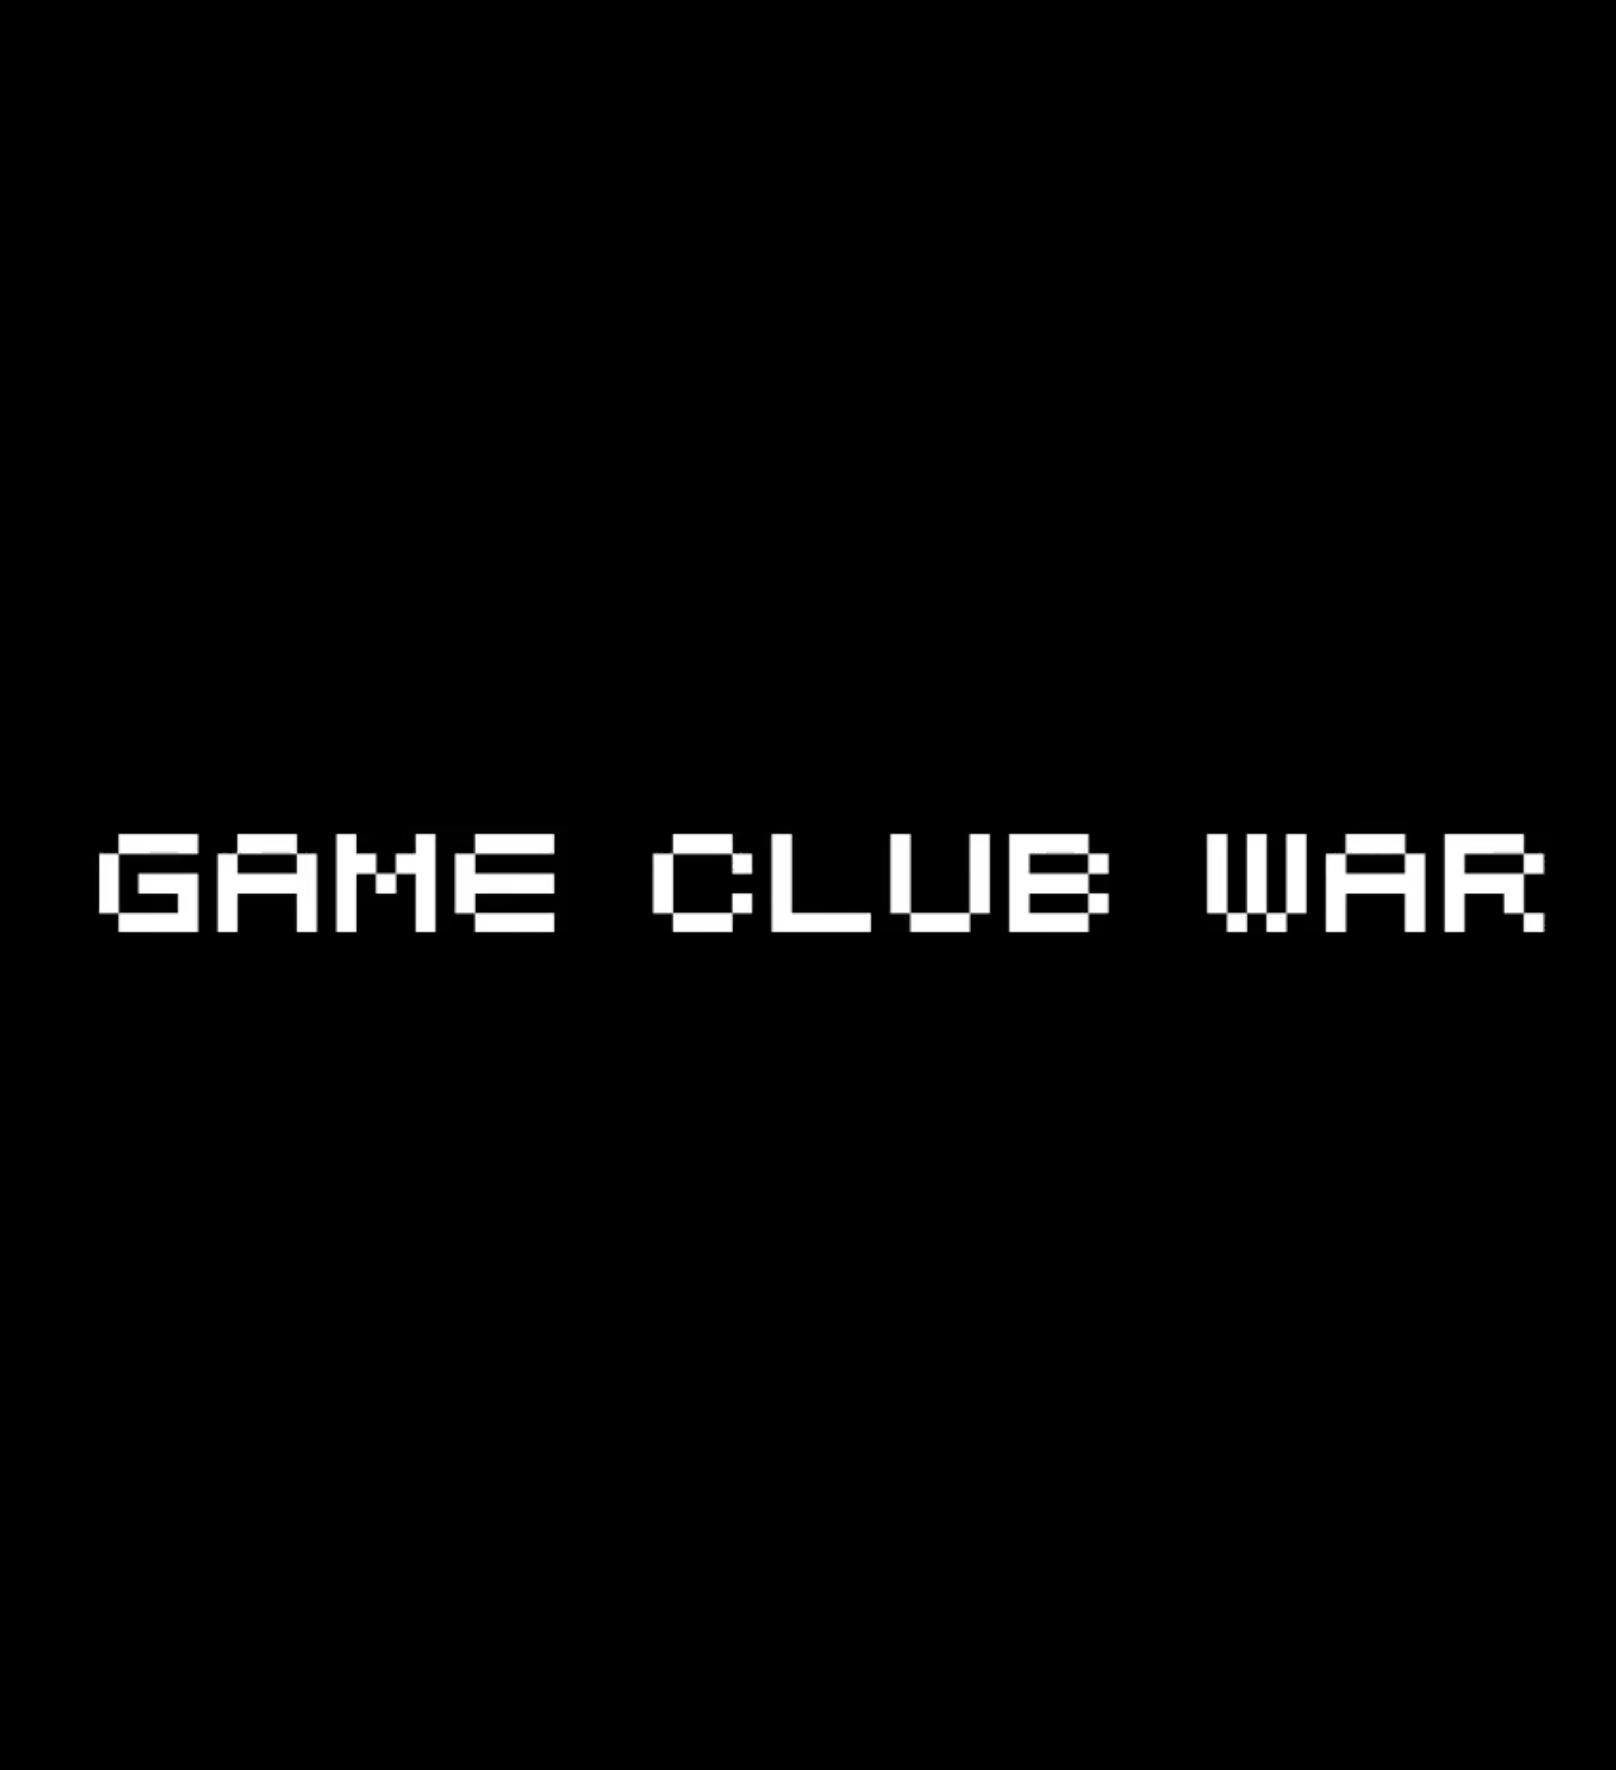 Game Club War